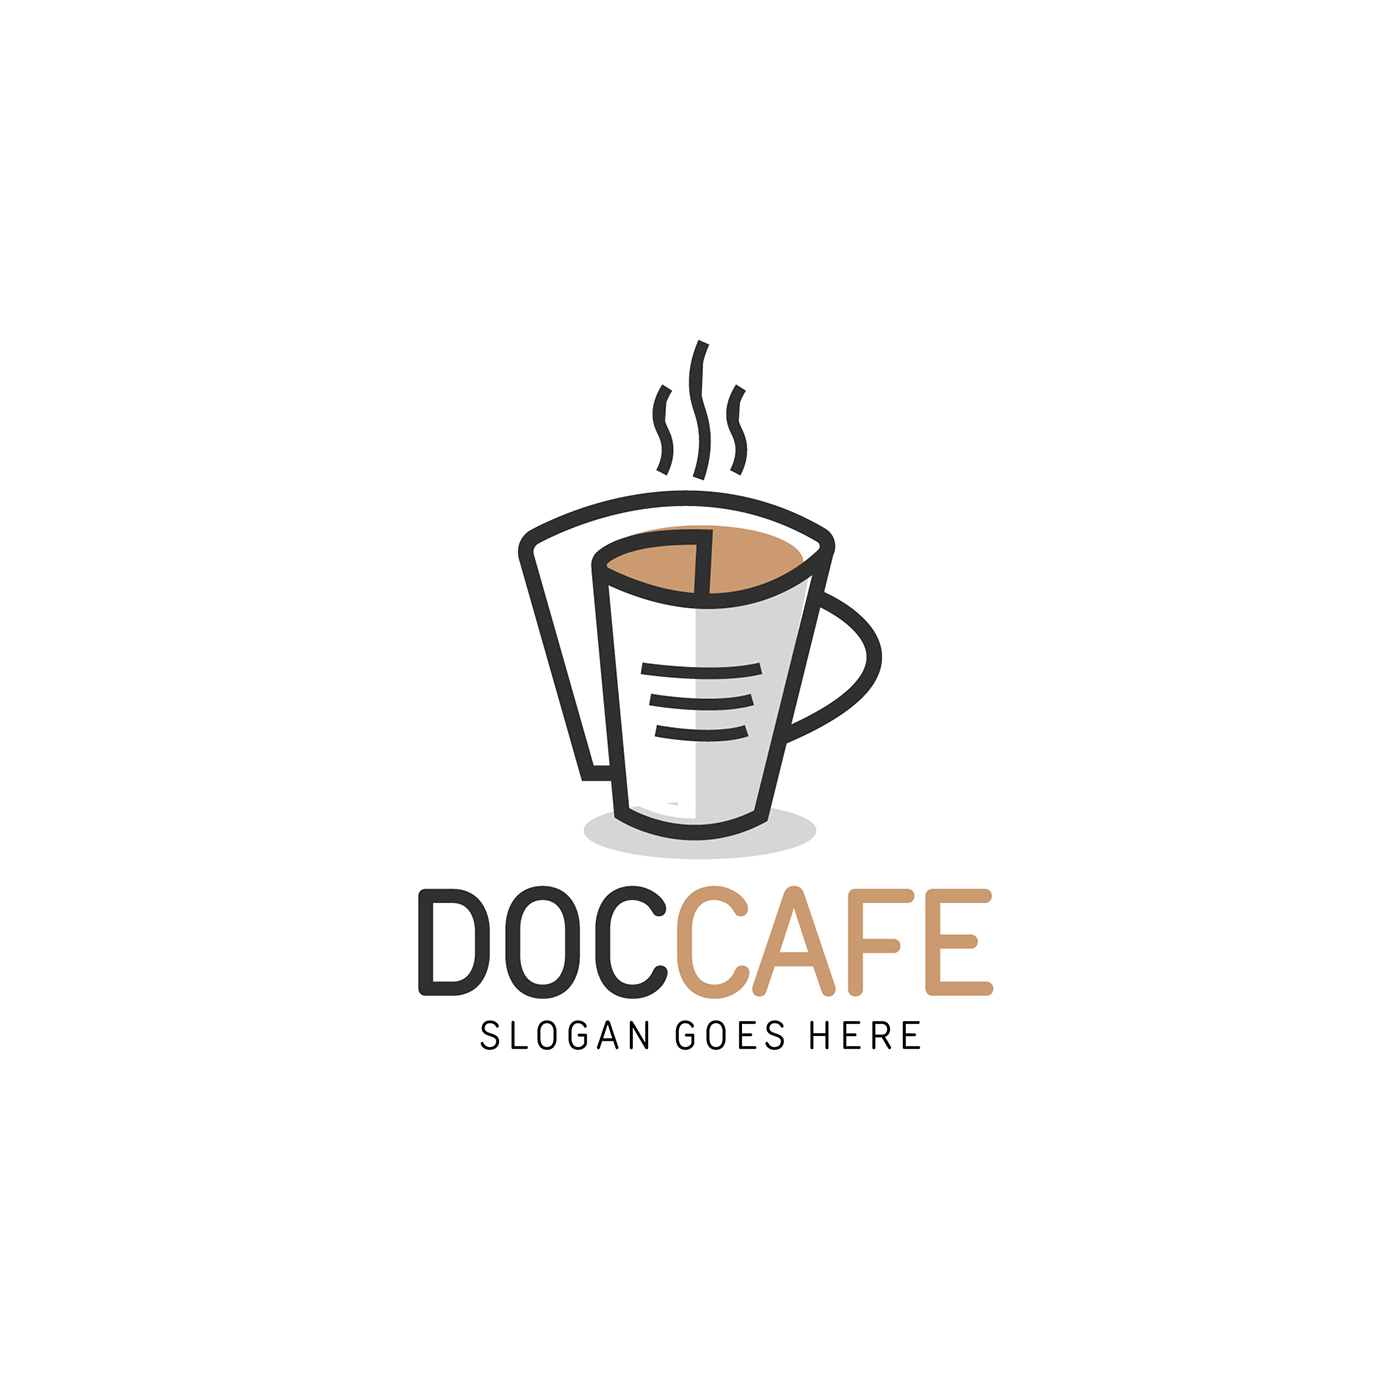 cafe cafe logo Coffee creative logo brand identity vect plus branding  Brand Design Logo Design